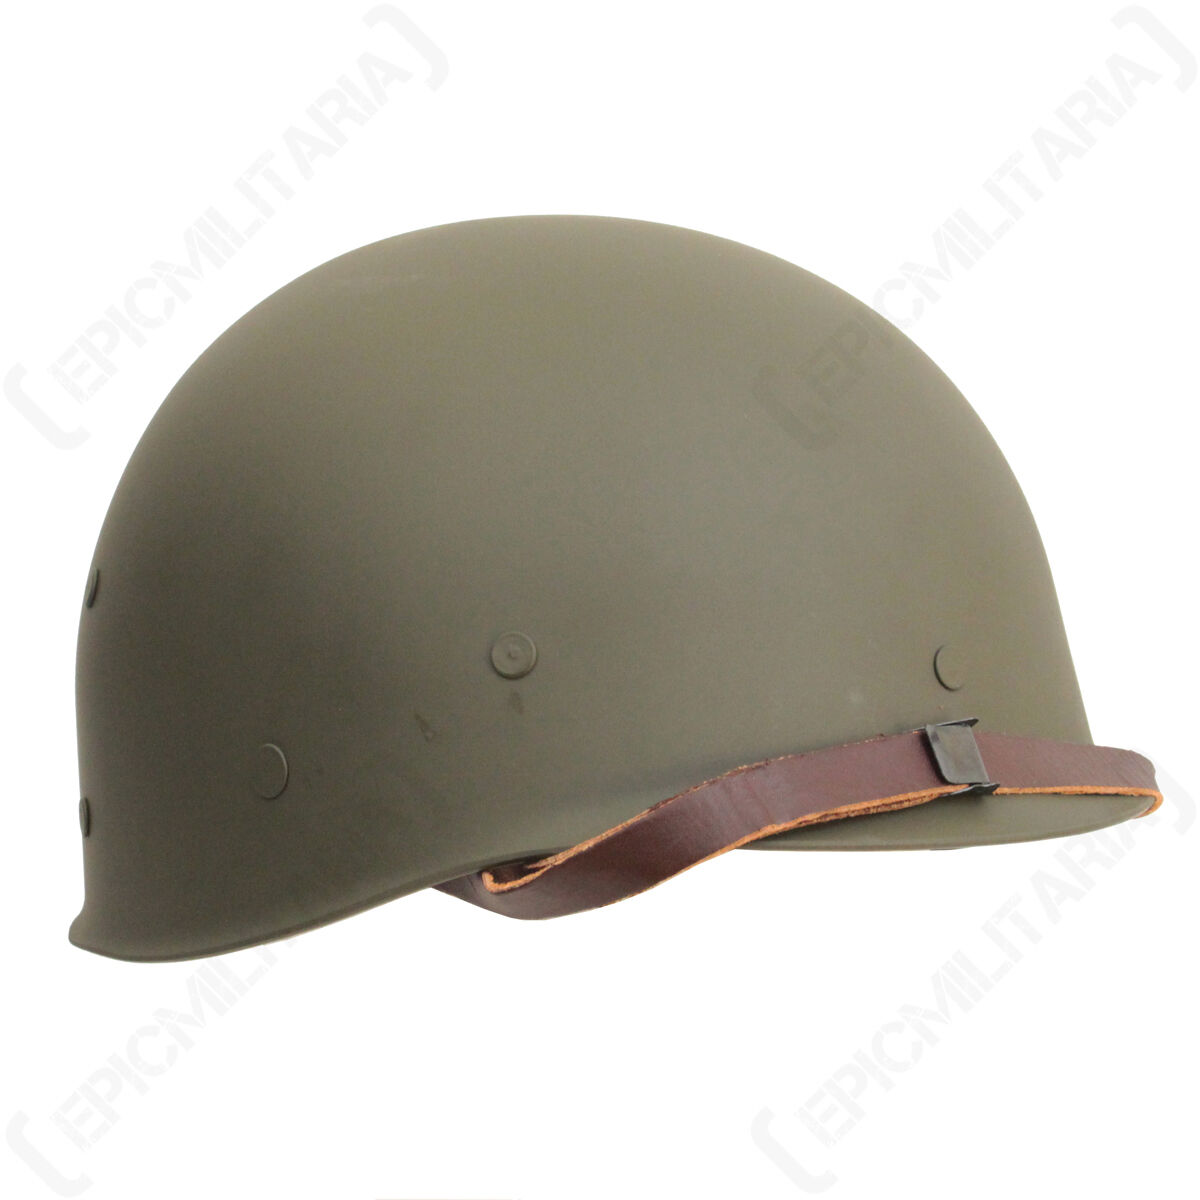 Us M1 Helmet Liner - Repro American Ww2 Korea Vietnam Soldier Military Uniform